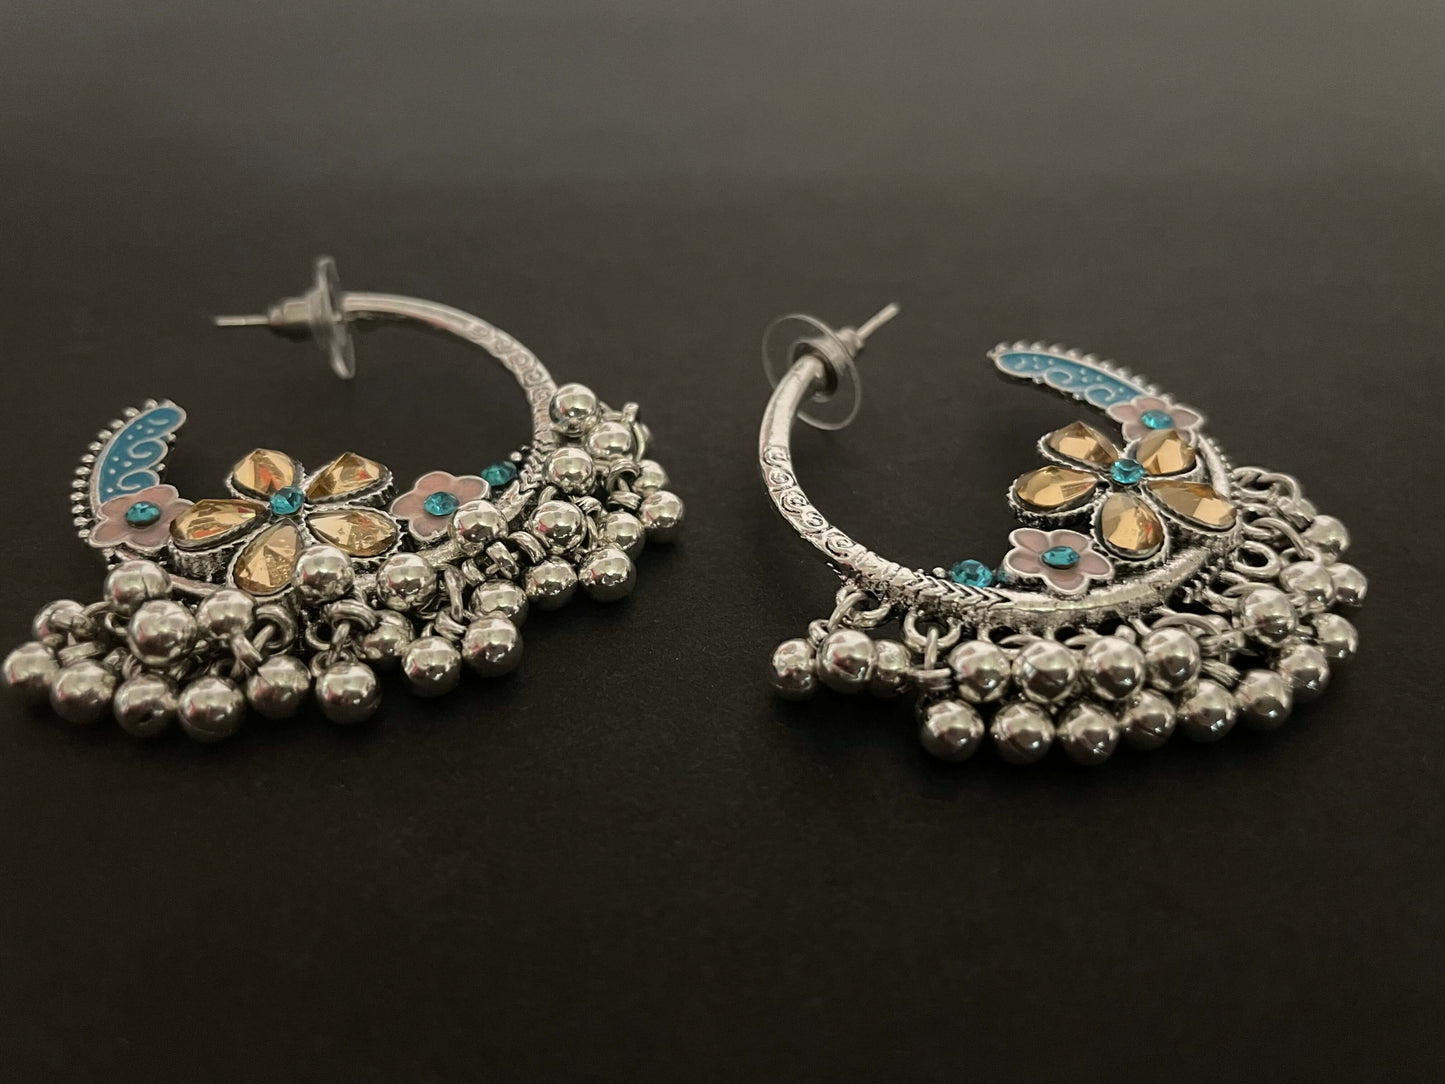 Ethnic Earrings oxidized decorations boho jewelry gift